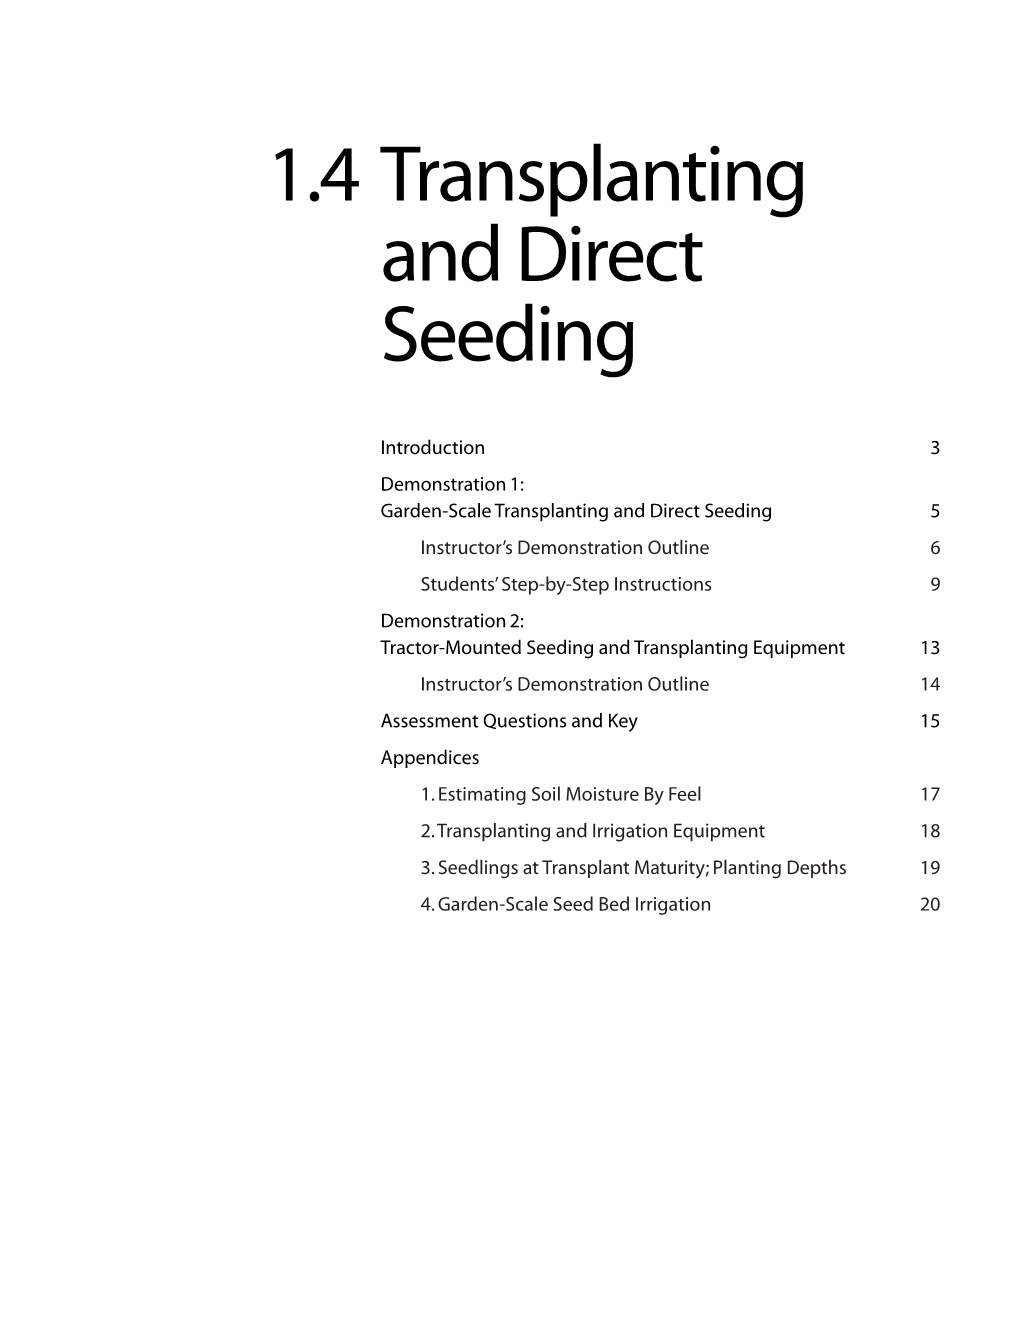 1.4 Transplanting and Direct Seeding